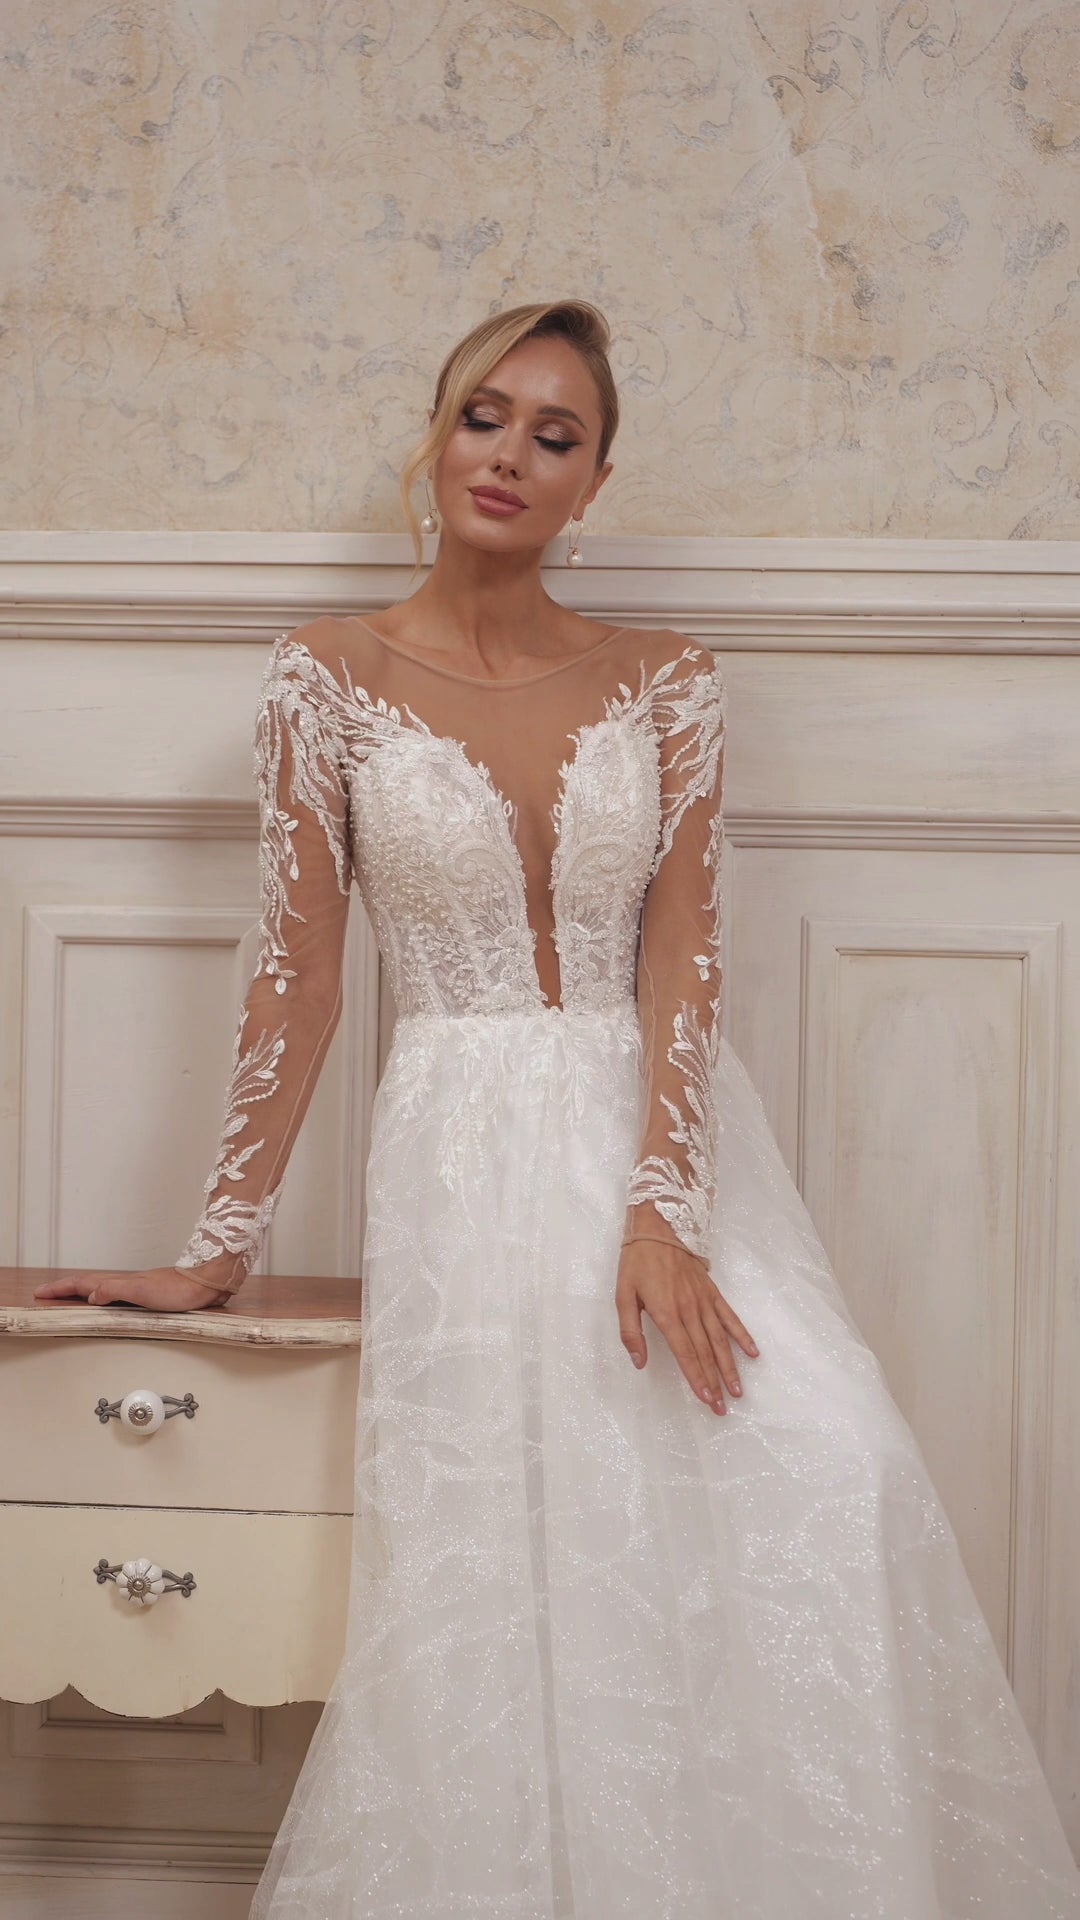 Elegant Sheer-Sleeved Lace A-Line Wedding Dress | V-Neck Bridal Gown with Full Skirt